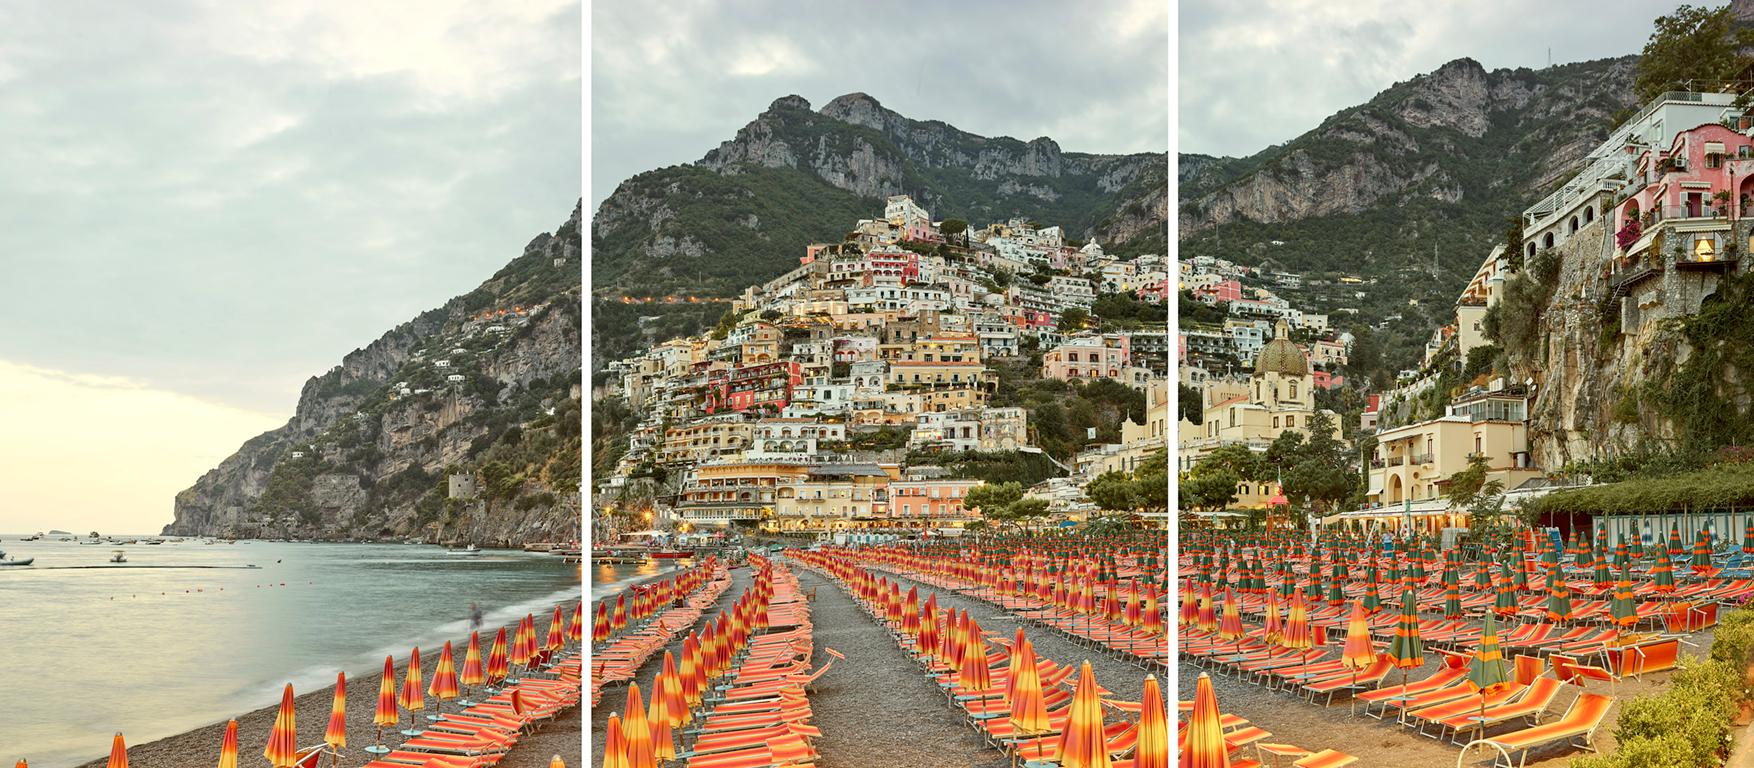 David Burdeny Color Photograph - Positano, Amalfi Coast, Italy (Triptych)